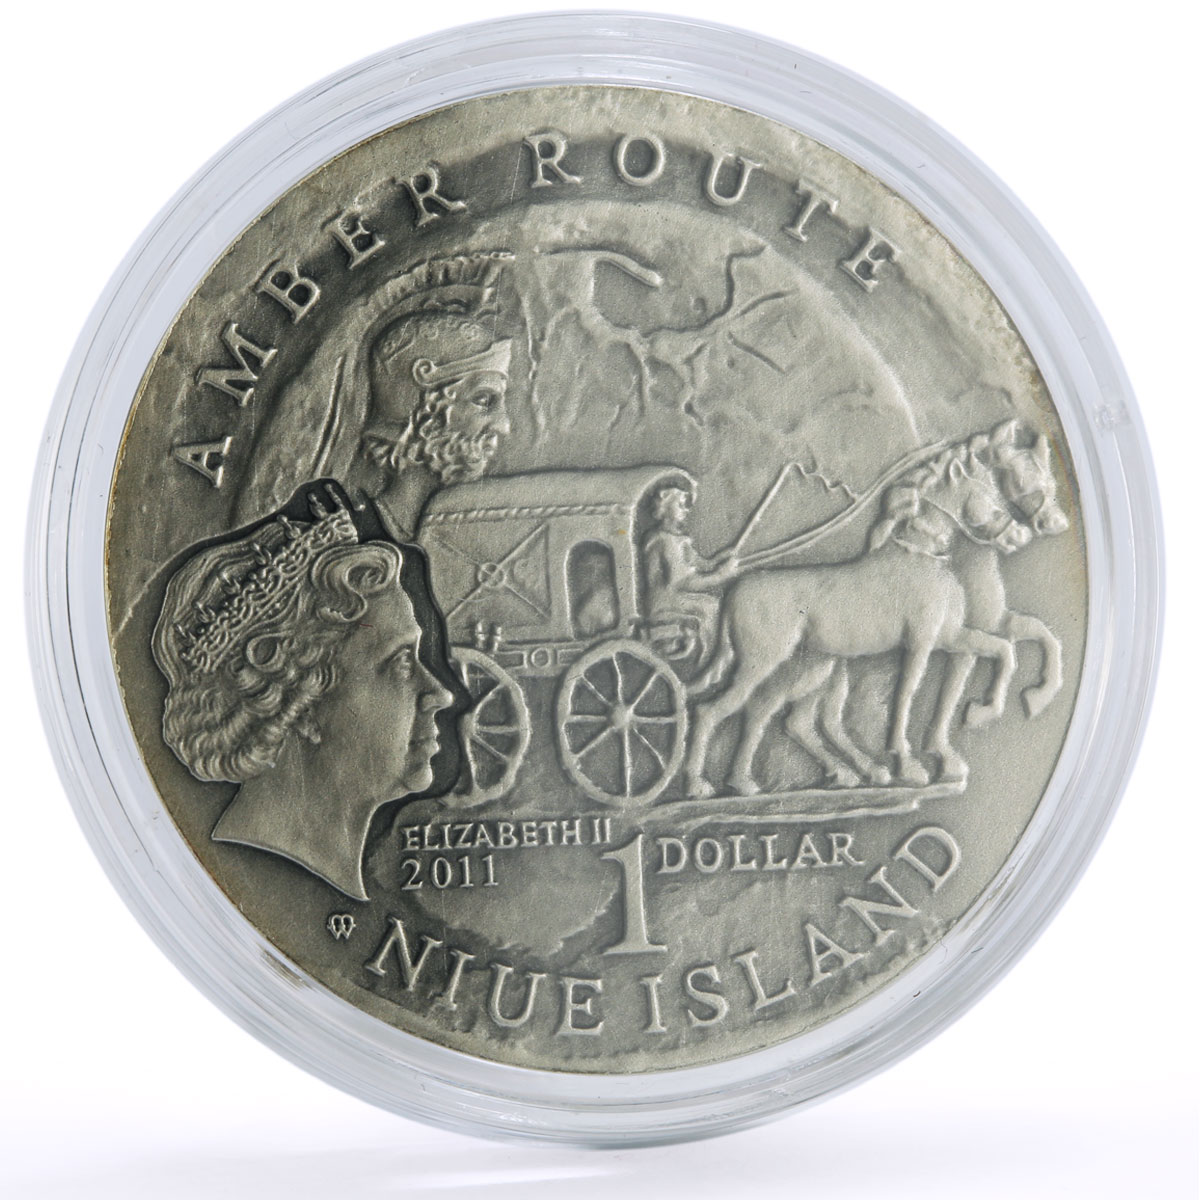 Niue 1 dollar Amber Routes Aquileia City silver coin 2011